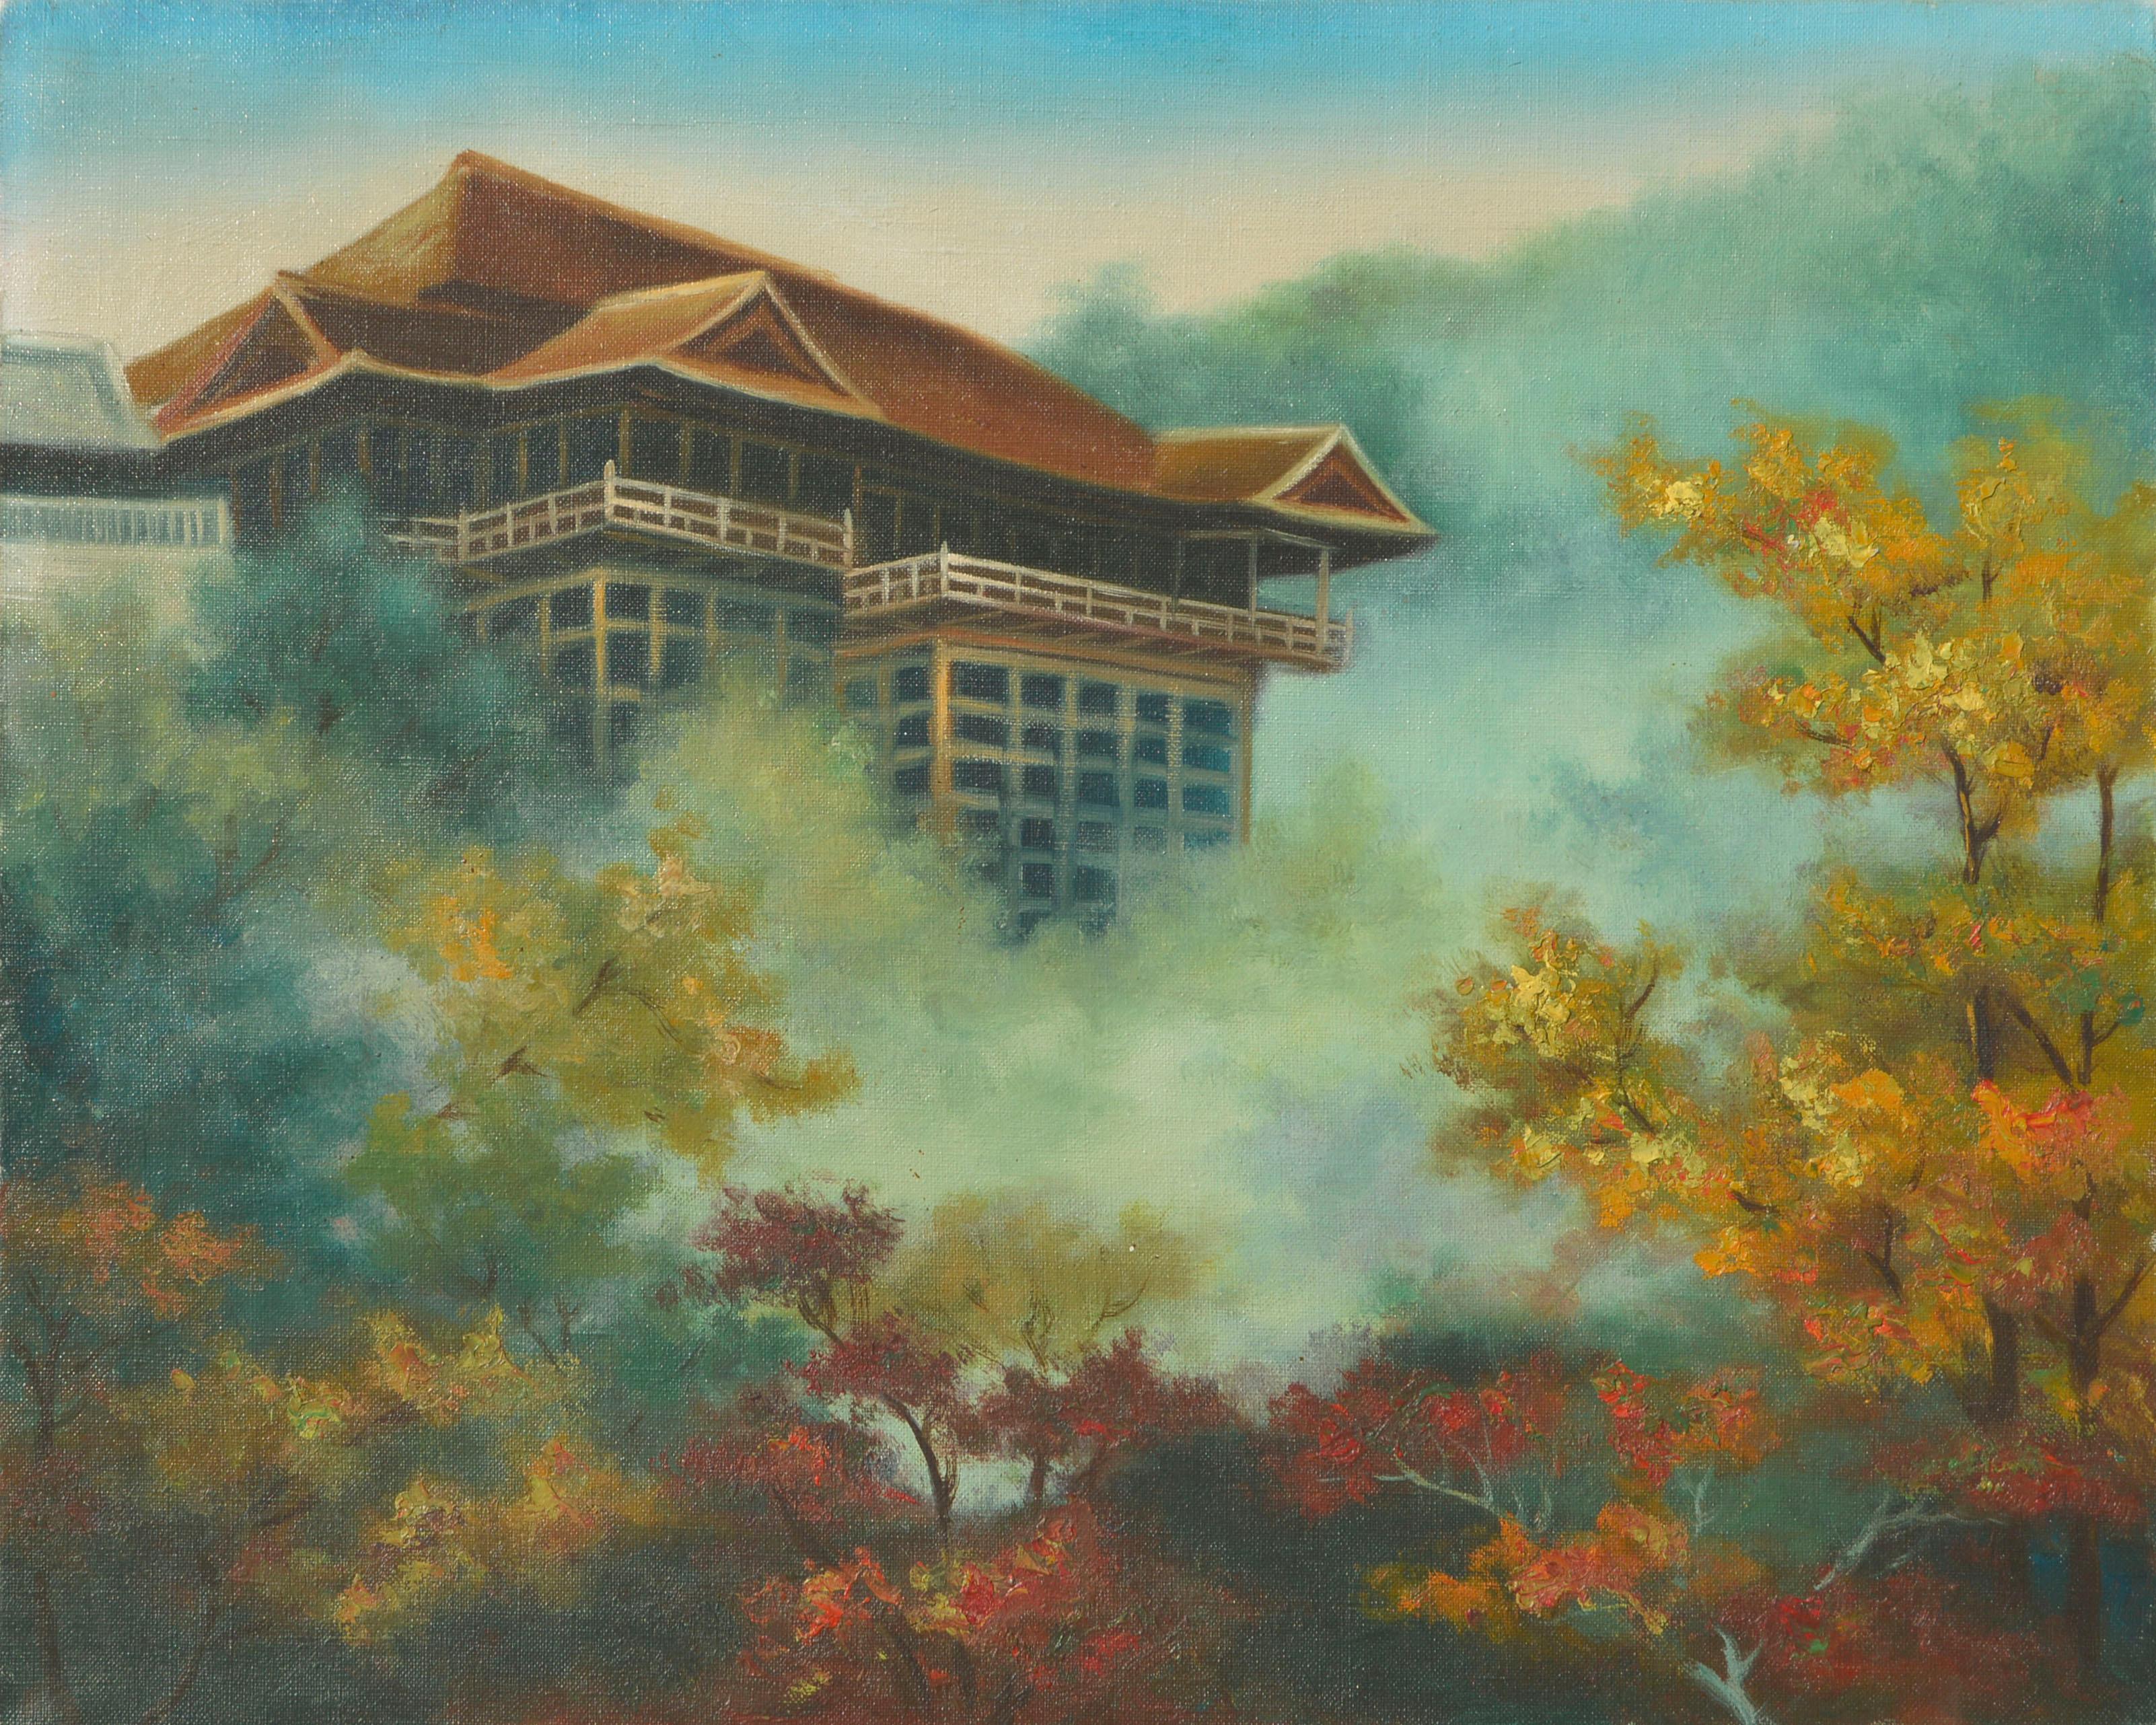 Japanese Tea House in the Mist - Mid Century Landscape